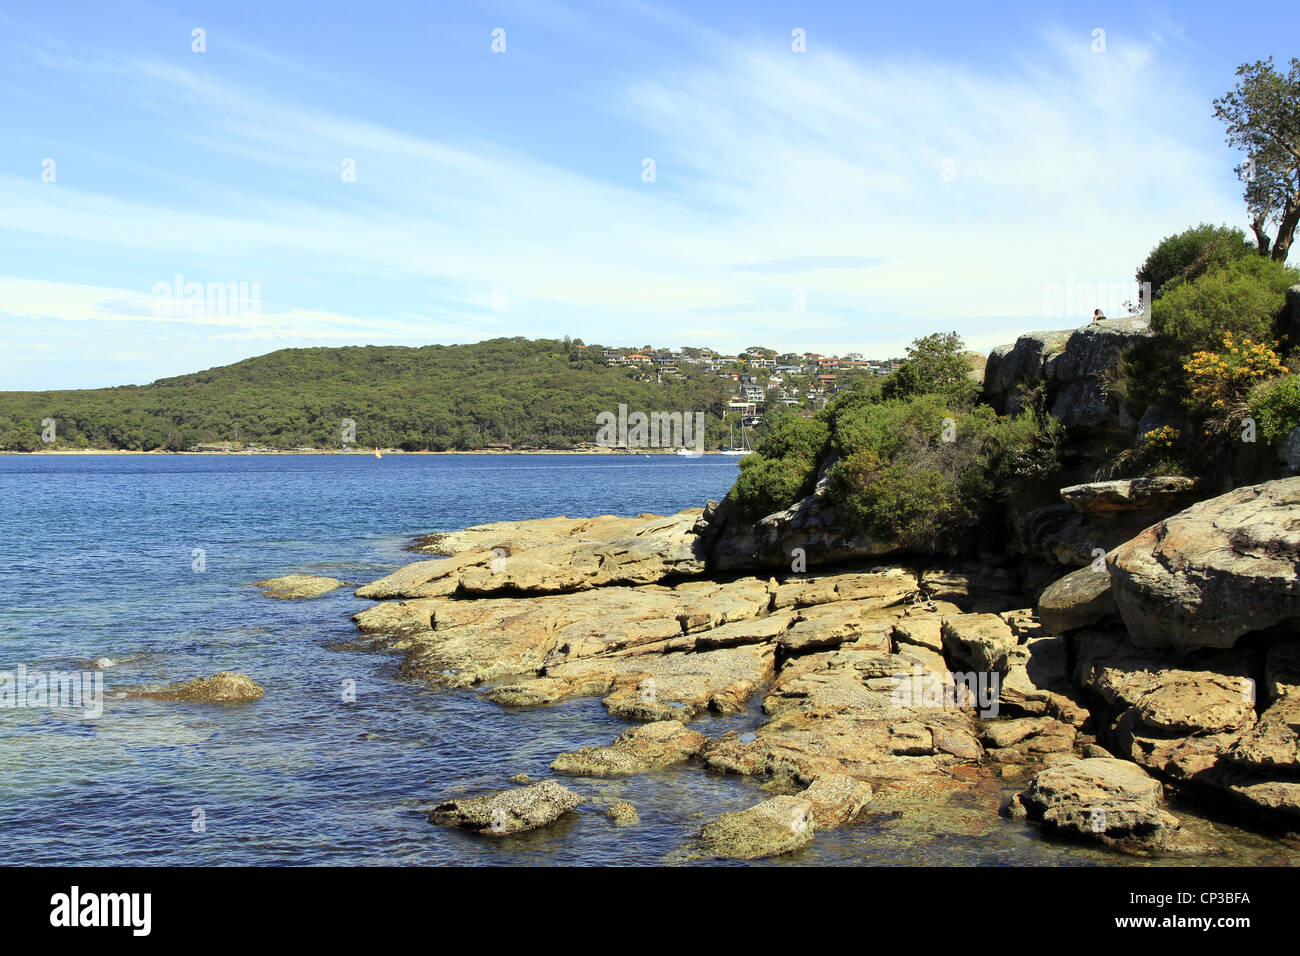 Eine felsige Felsspitze Manly Manly Cove, betreten. Sydney. New South Wales Australien Stockfoto